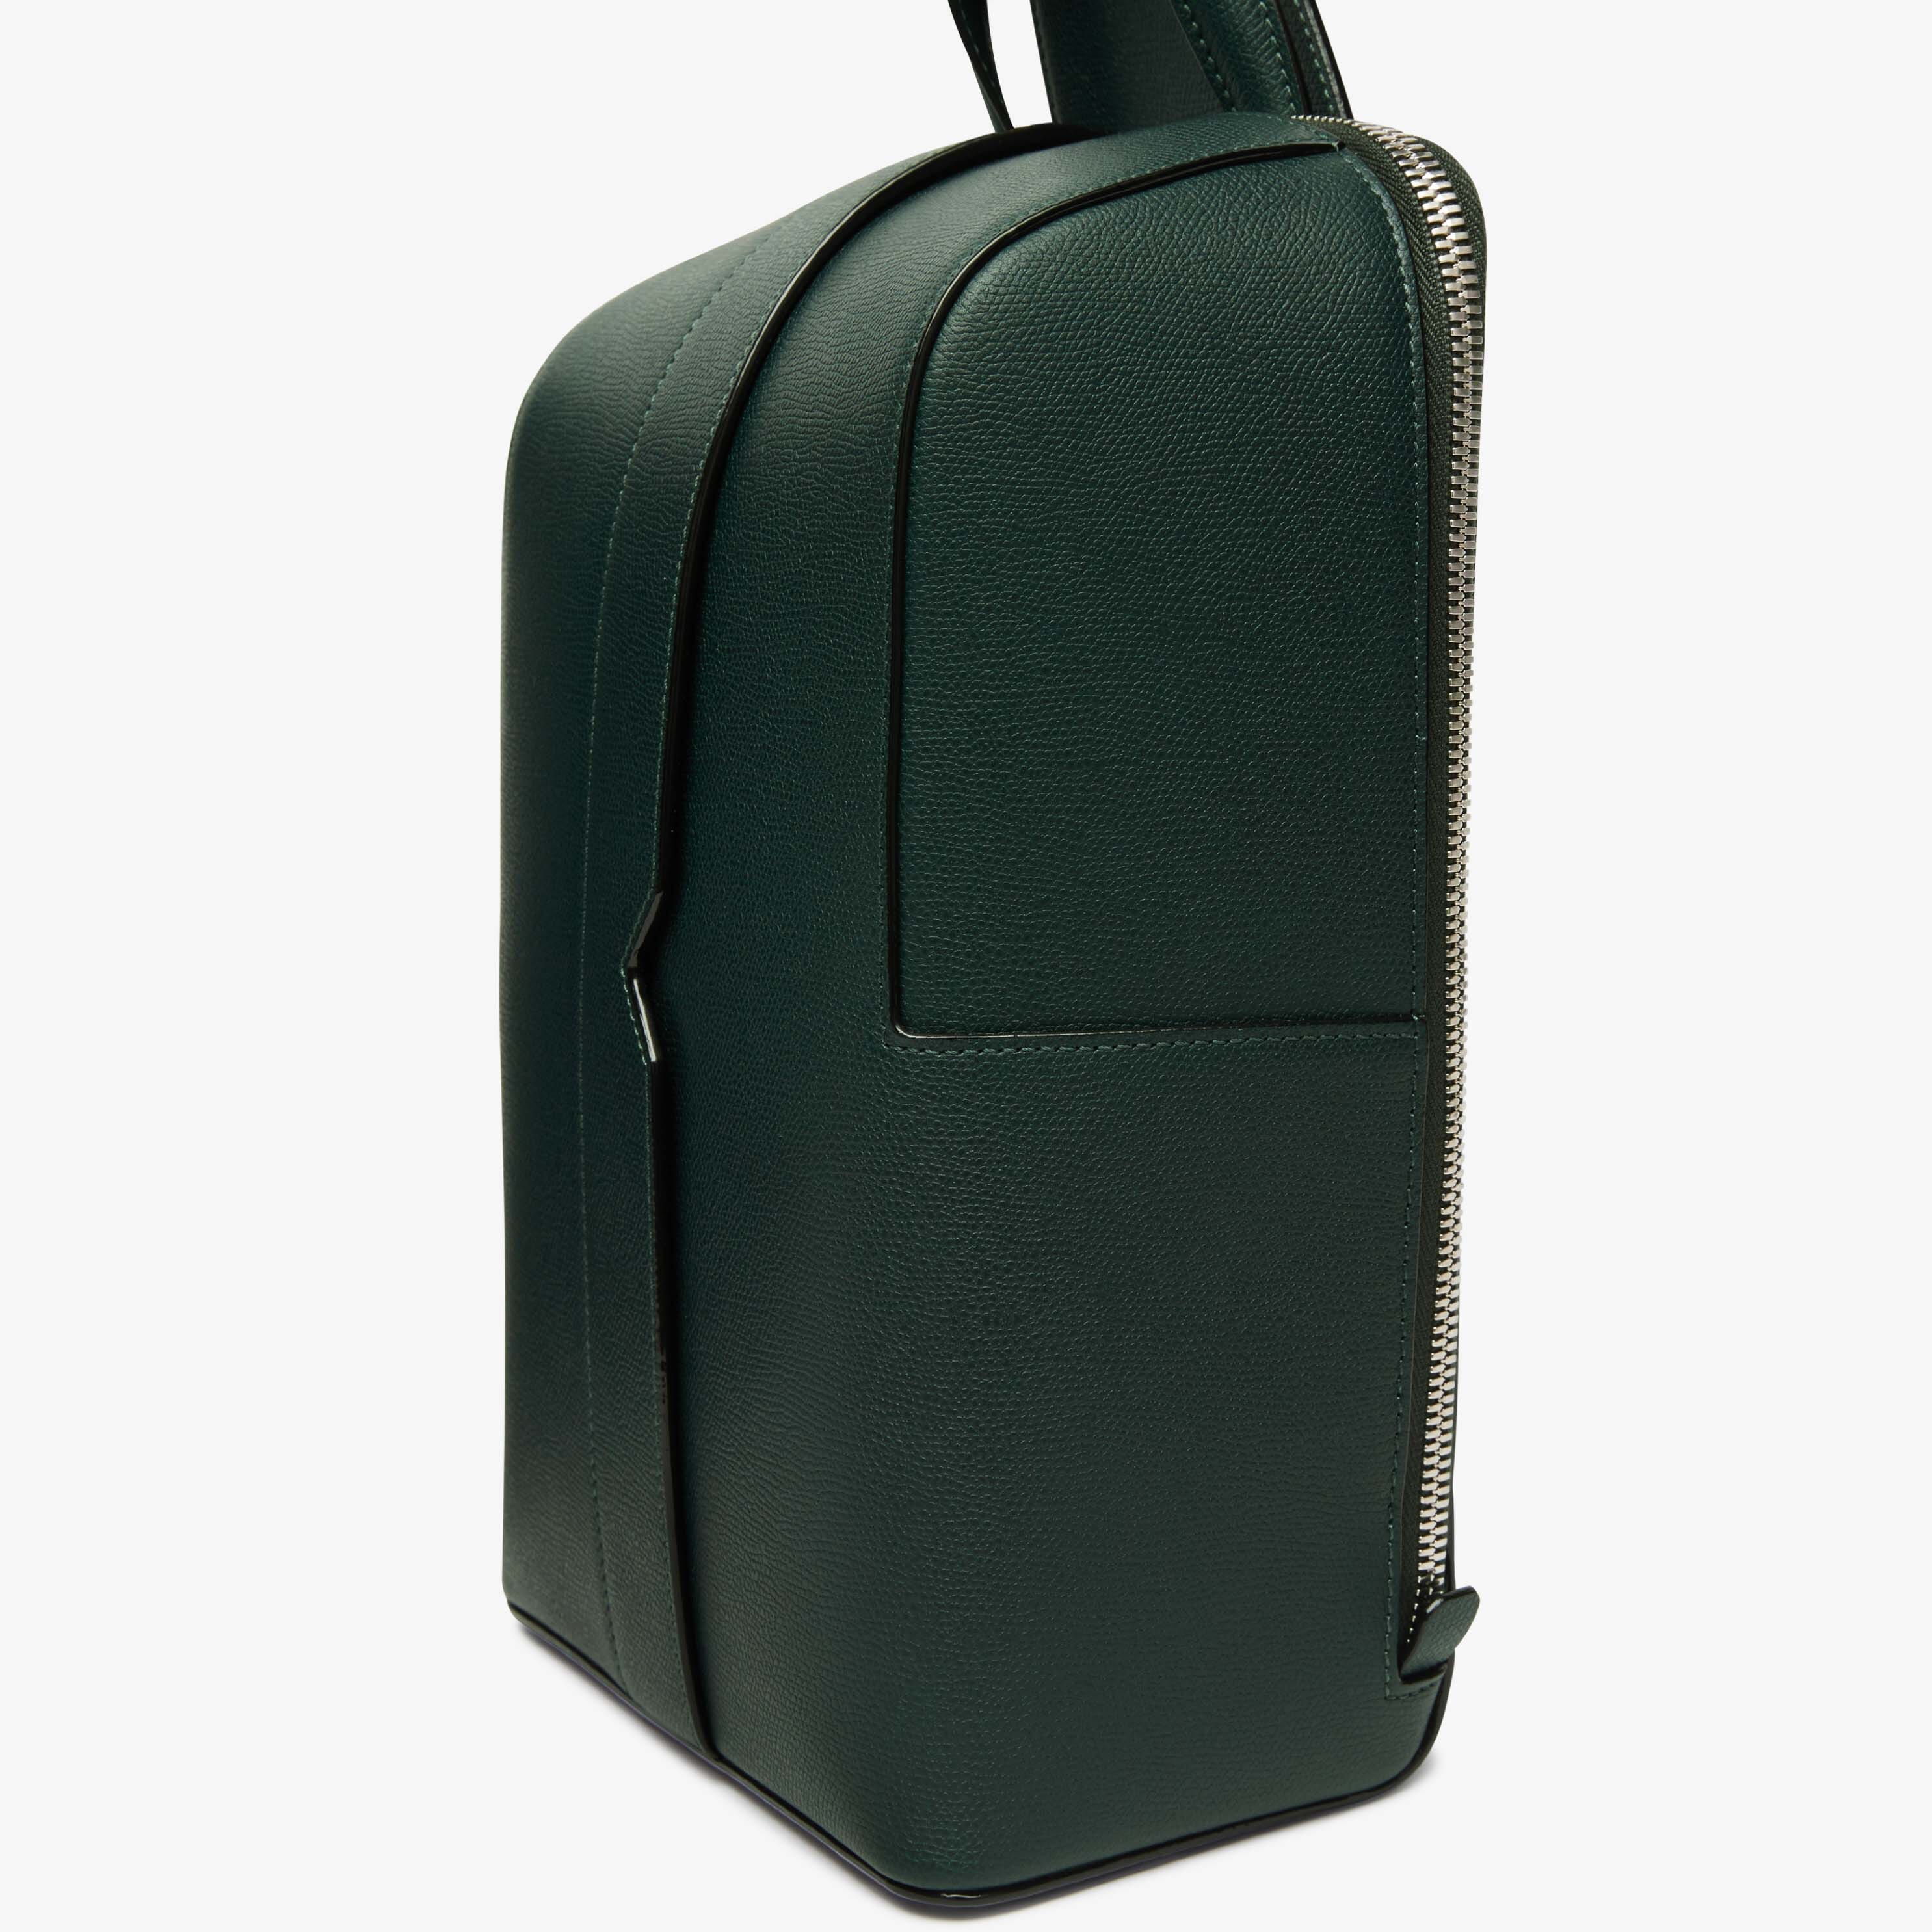 V-line One Shoulder Backpack - Valextra Green - Vitello VS - Valextra - 3